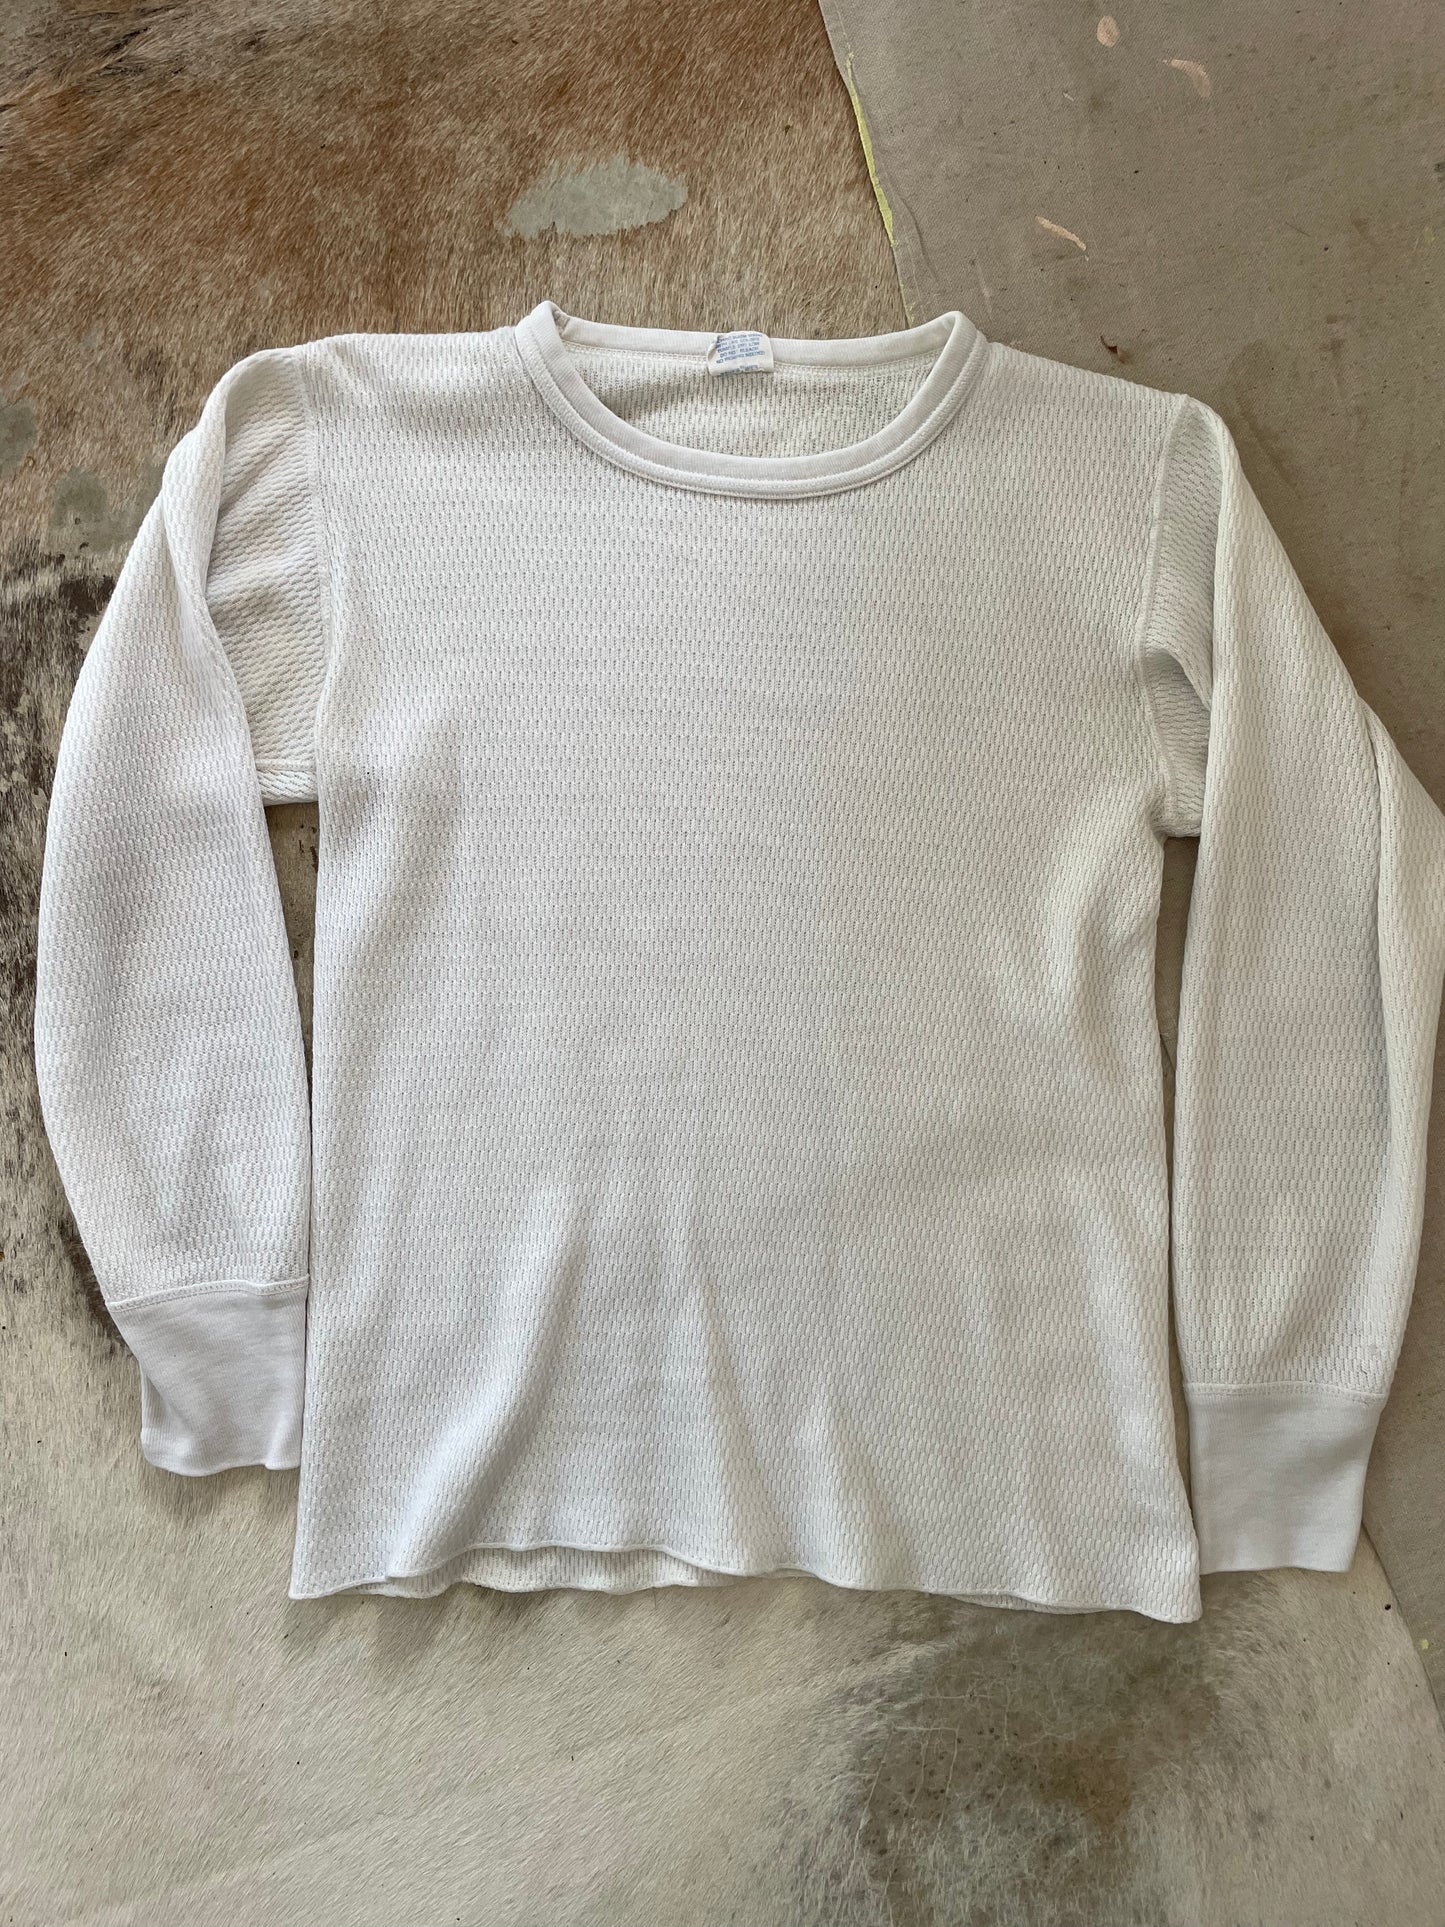 80s White Thermal Shirt